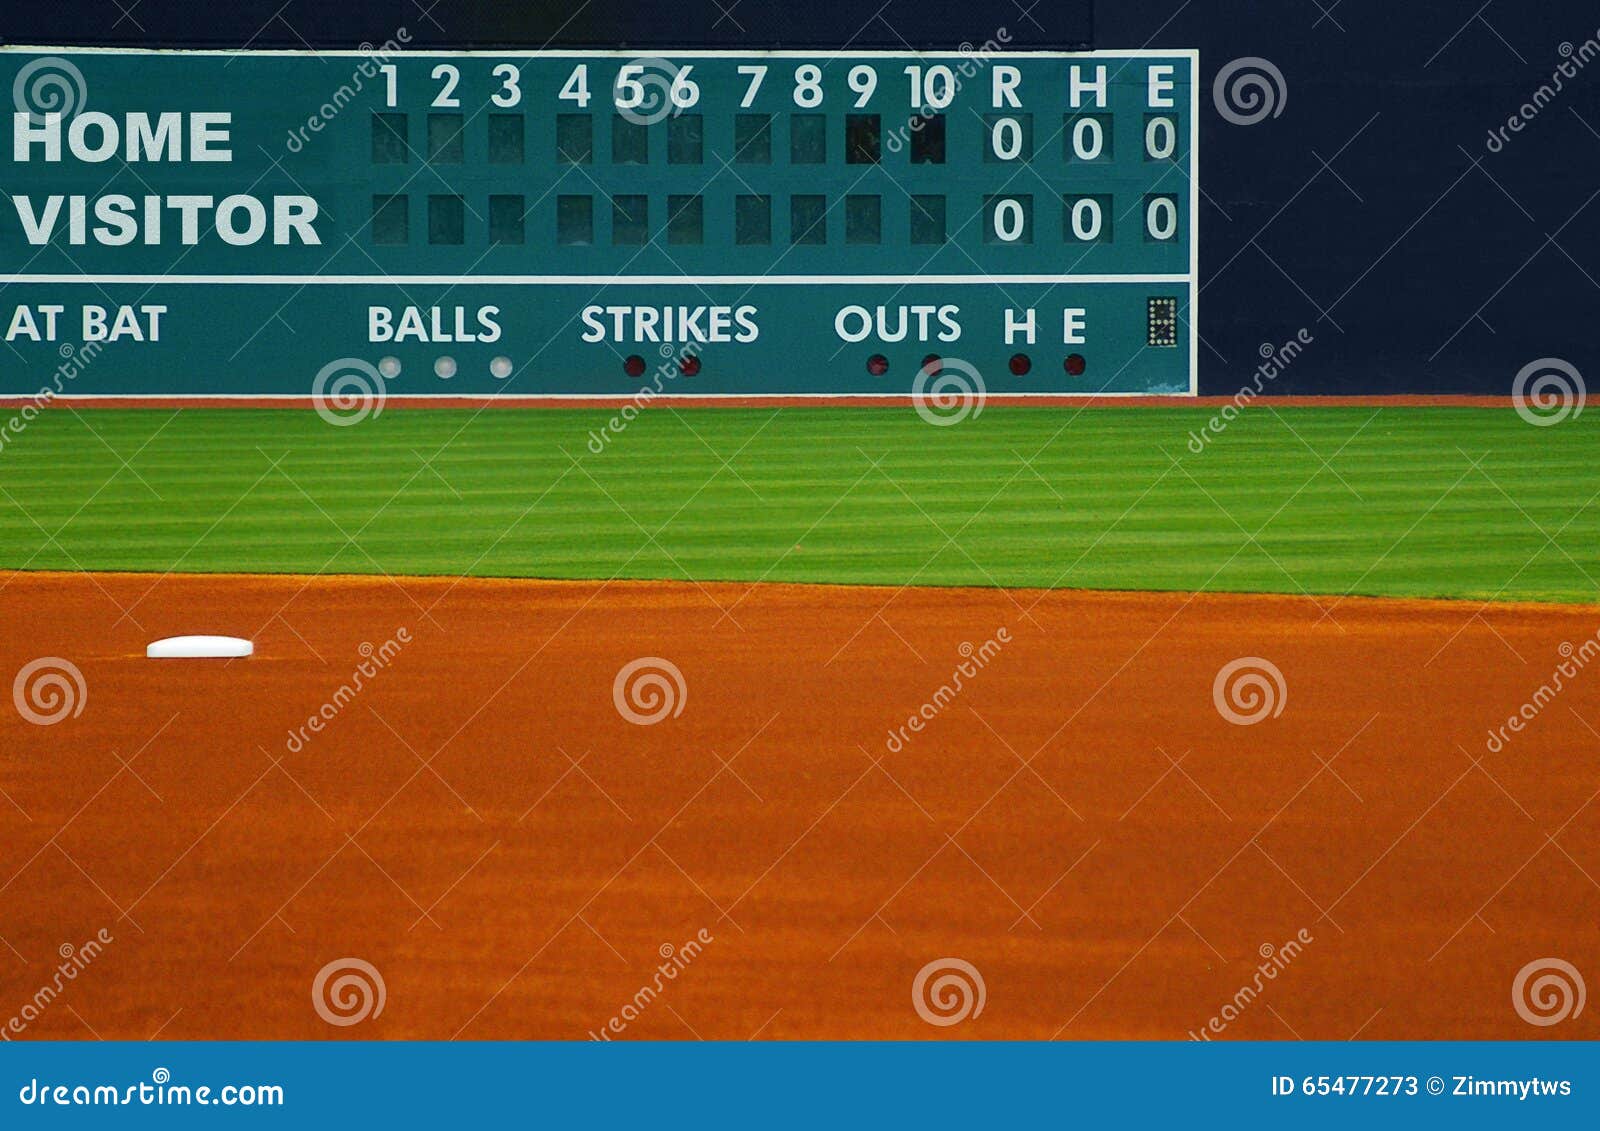 Retro Baseball Scoreboard Royalty Free Stock Photography